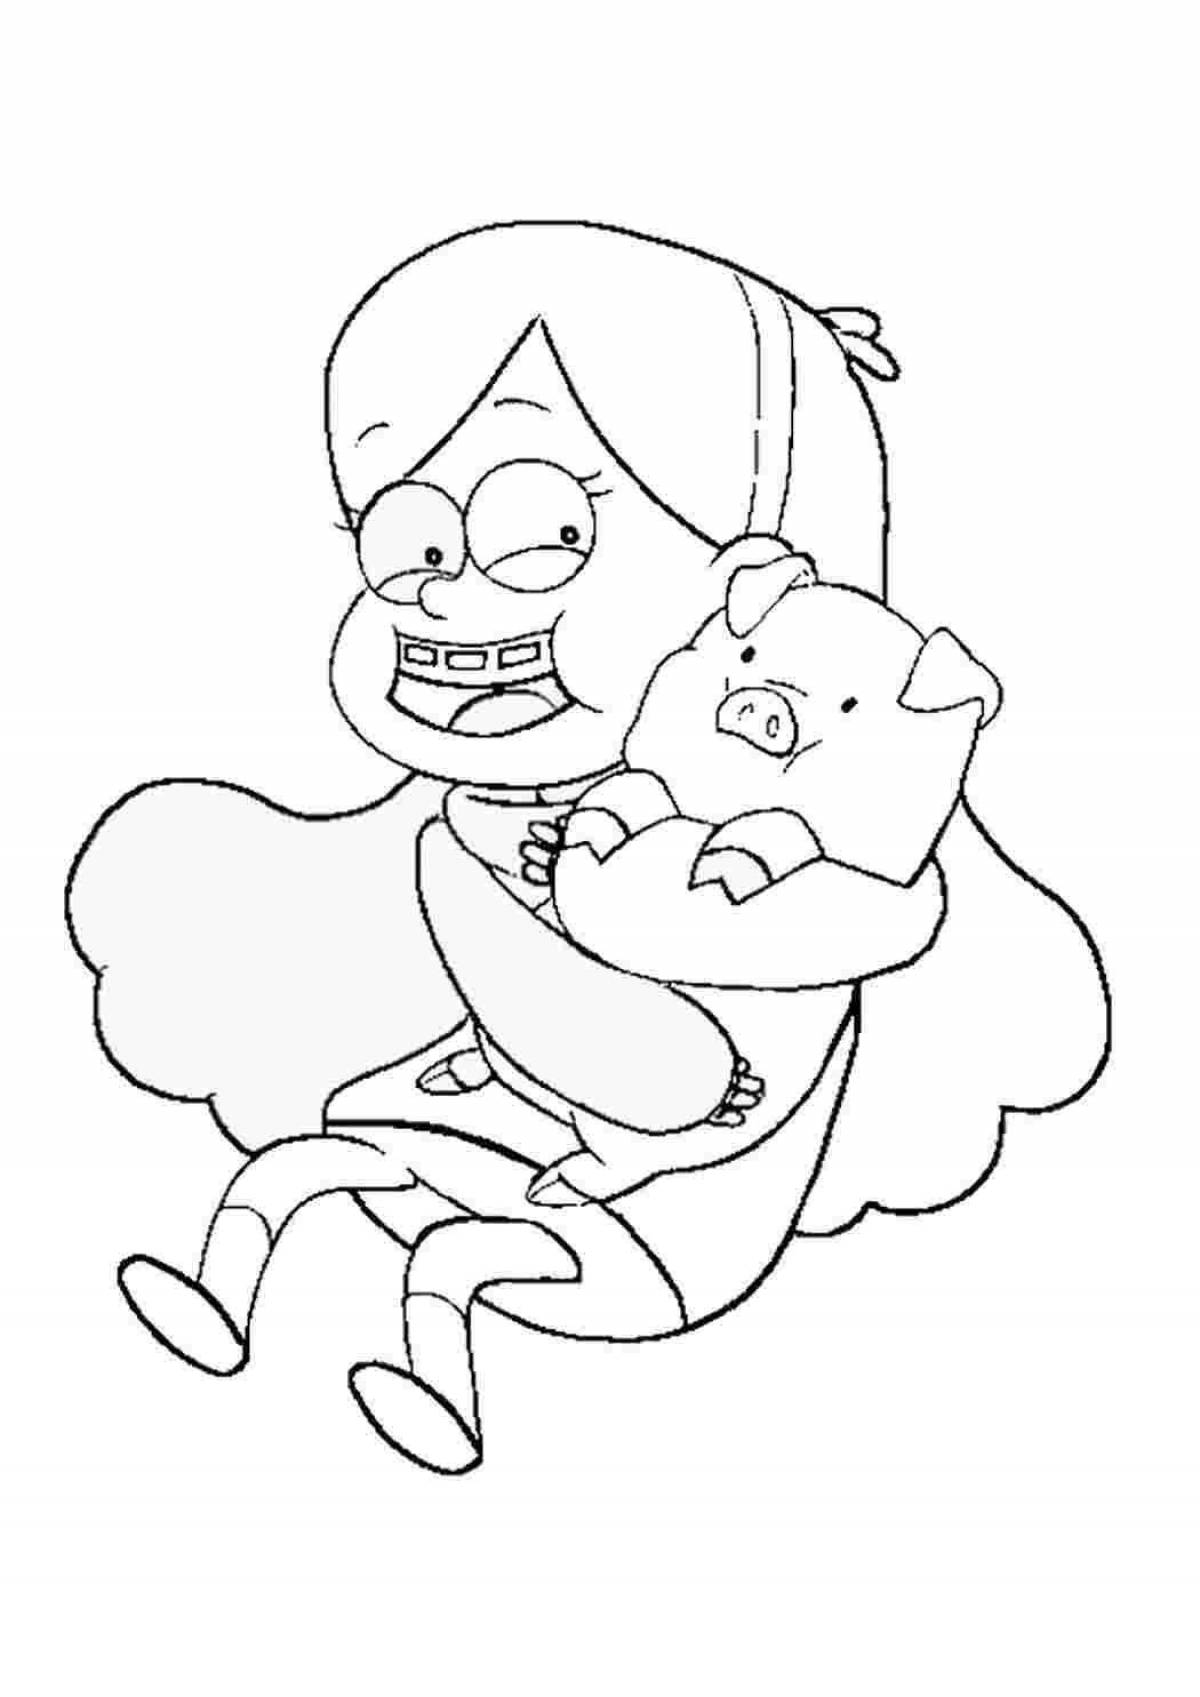 Shining Mabel from Gravity Falls